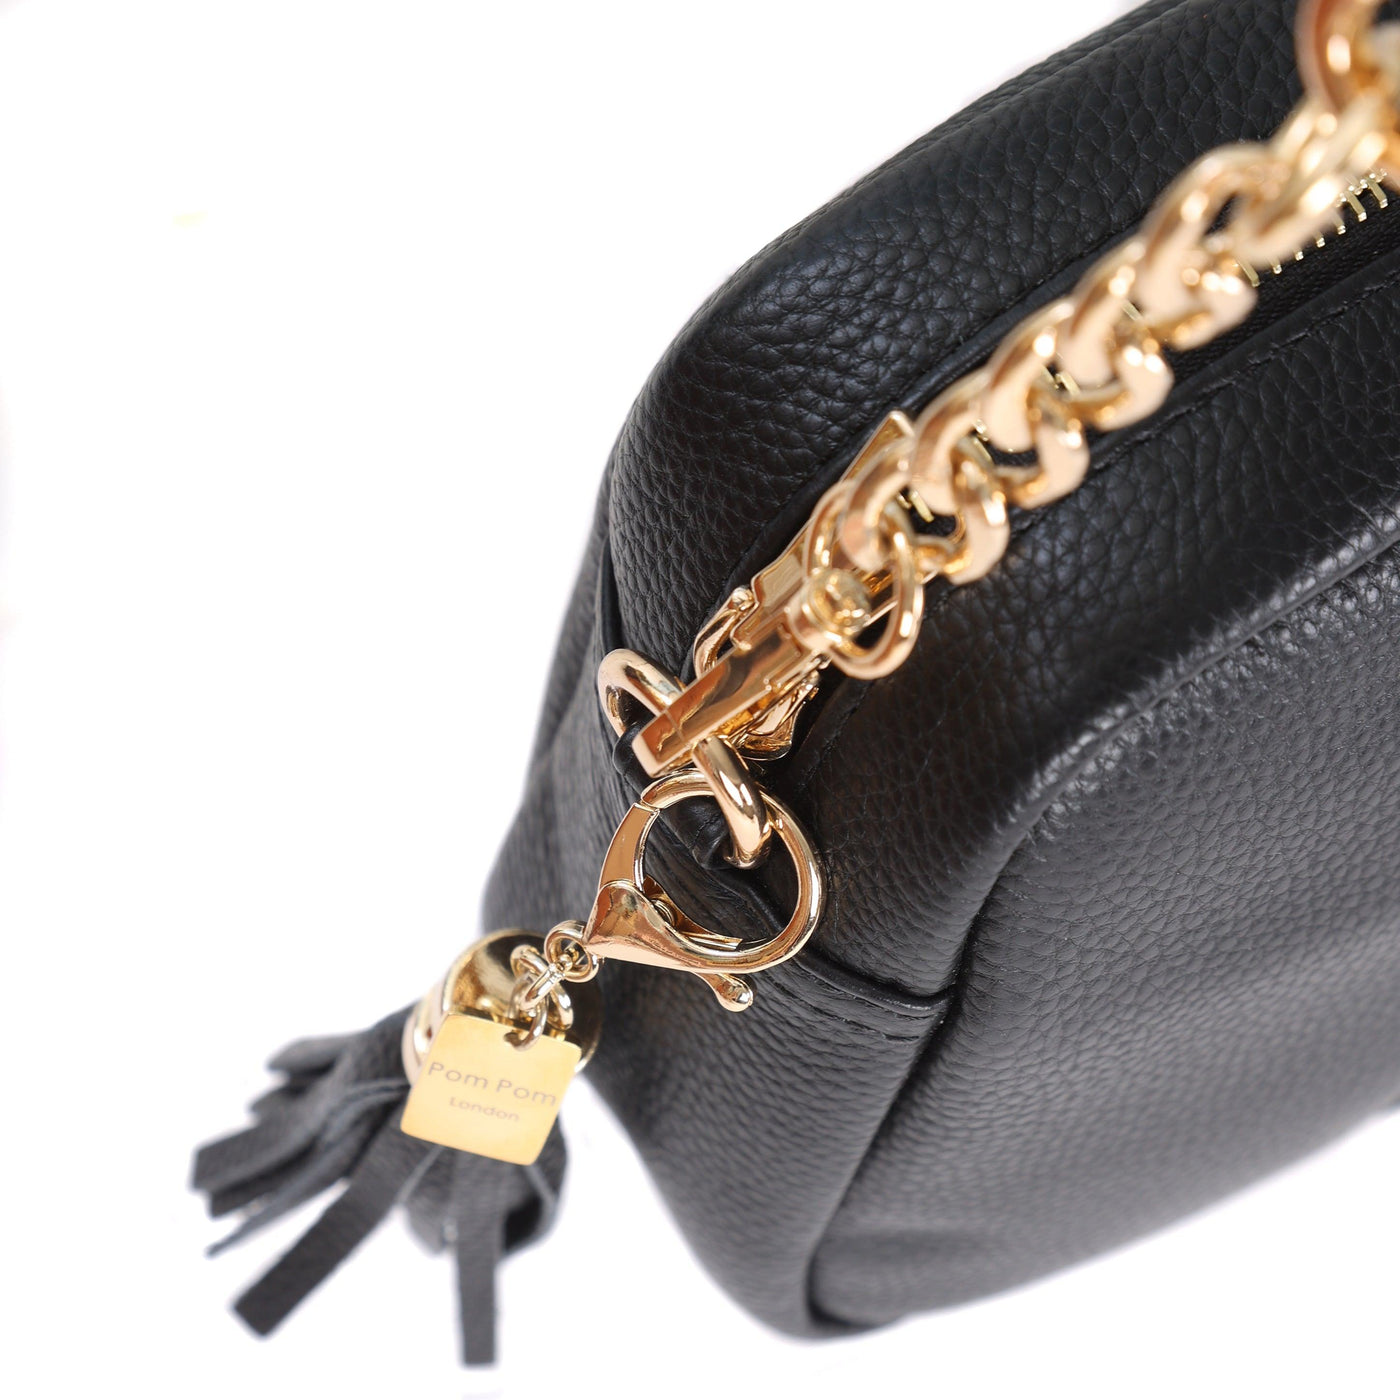 Bag Extension Chain Bag Accessories Short Chain Modification Bag Chain  Keychain